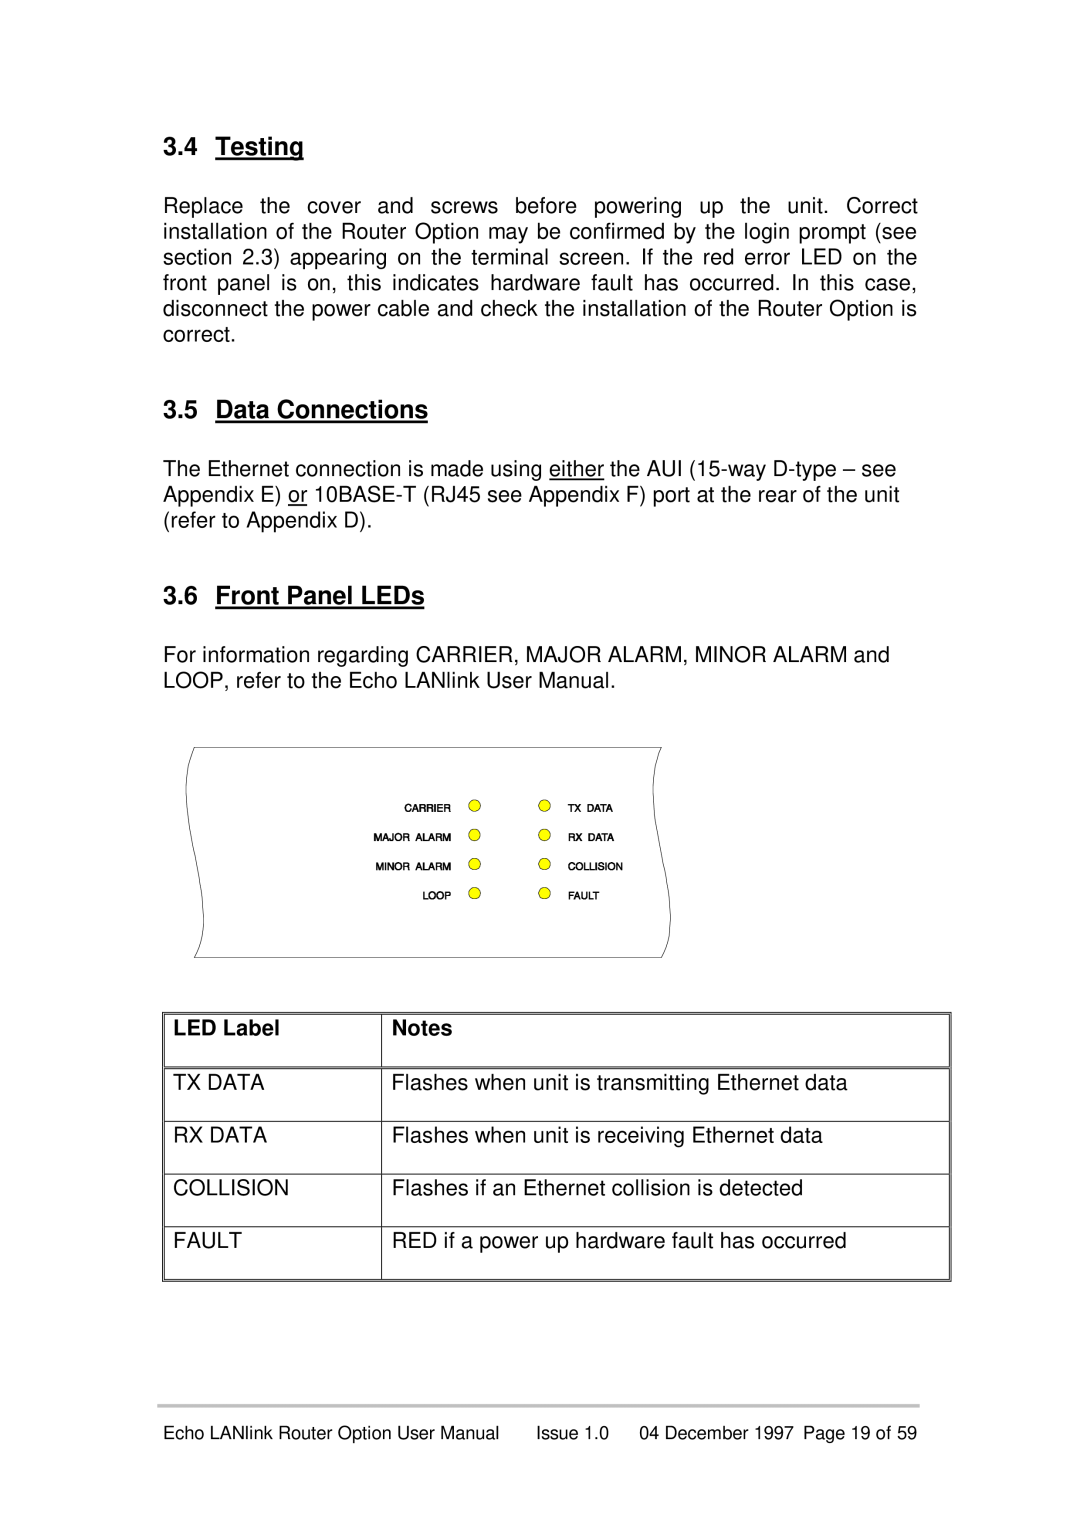 Echo EN55022 manual Testing, Data Connections, Front Panel LEDs, LED Label 